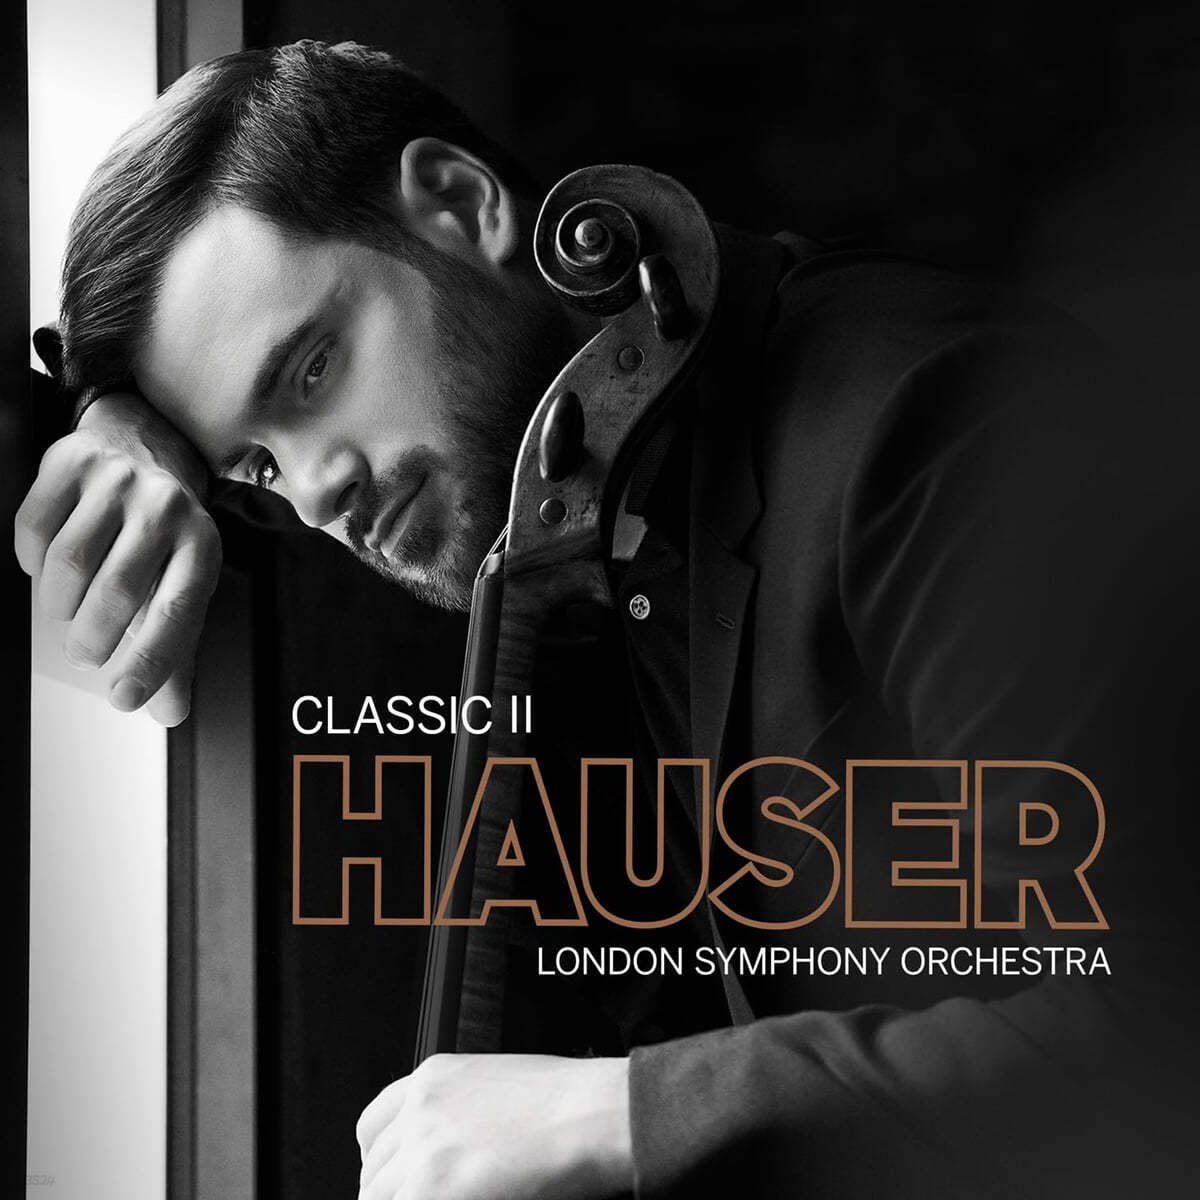 Hauser (하우저) - Classic II